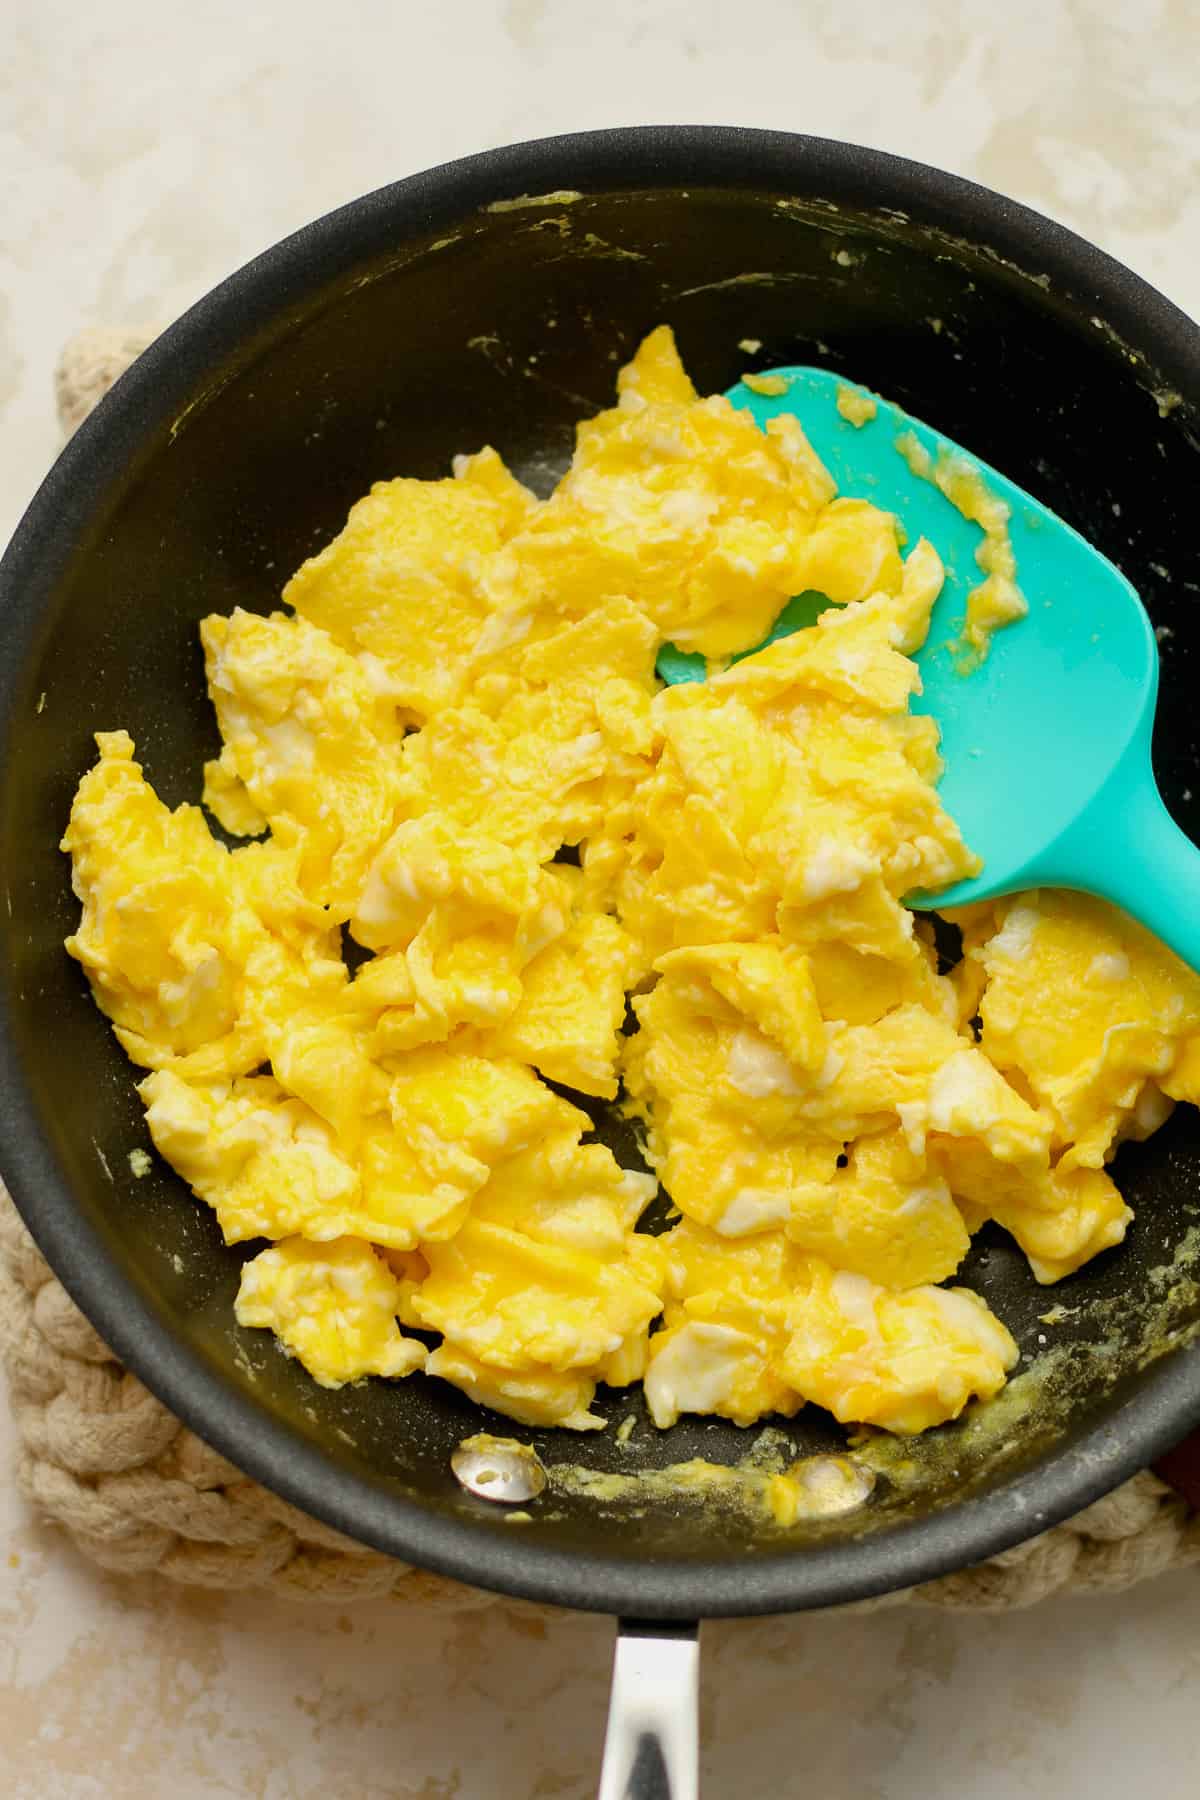 A pan of soft scrambled eggs.